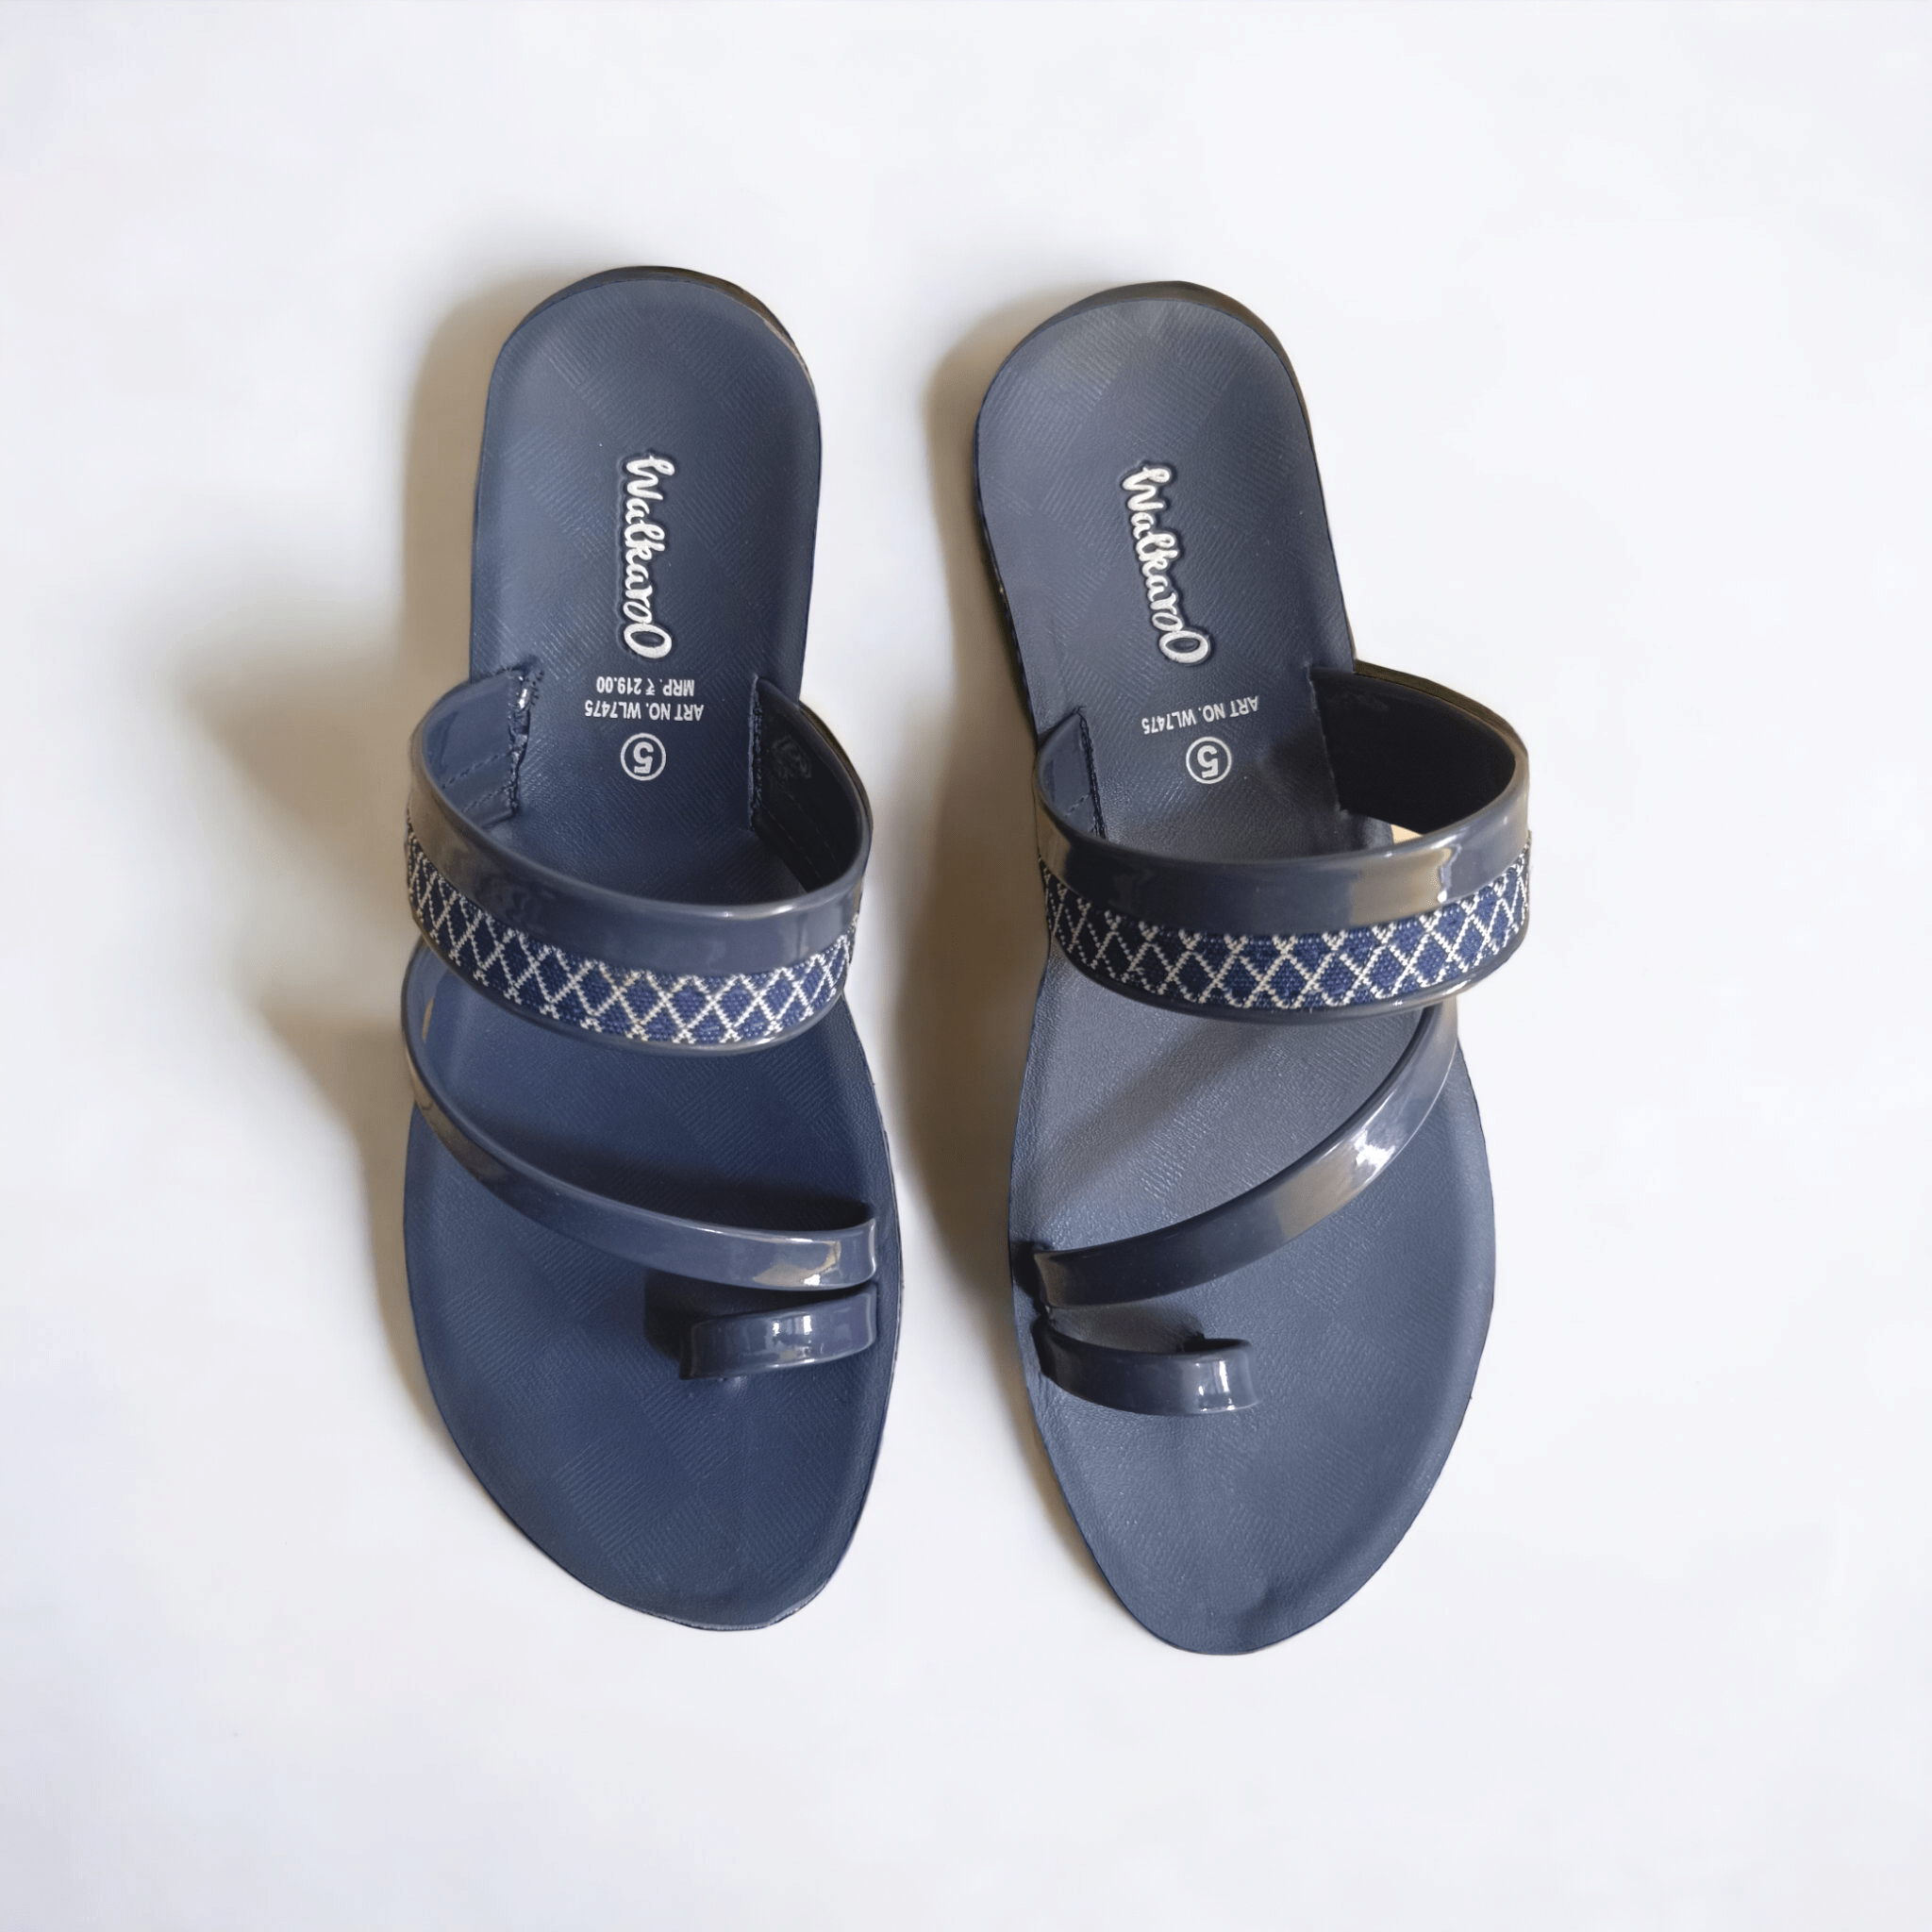 Walkaroo Chappal/Slippers for Women's - Fashion Sandal (Size 5 & 6) -  Finebuy